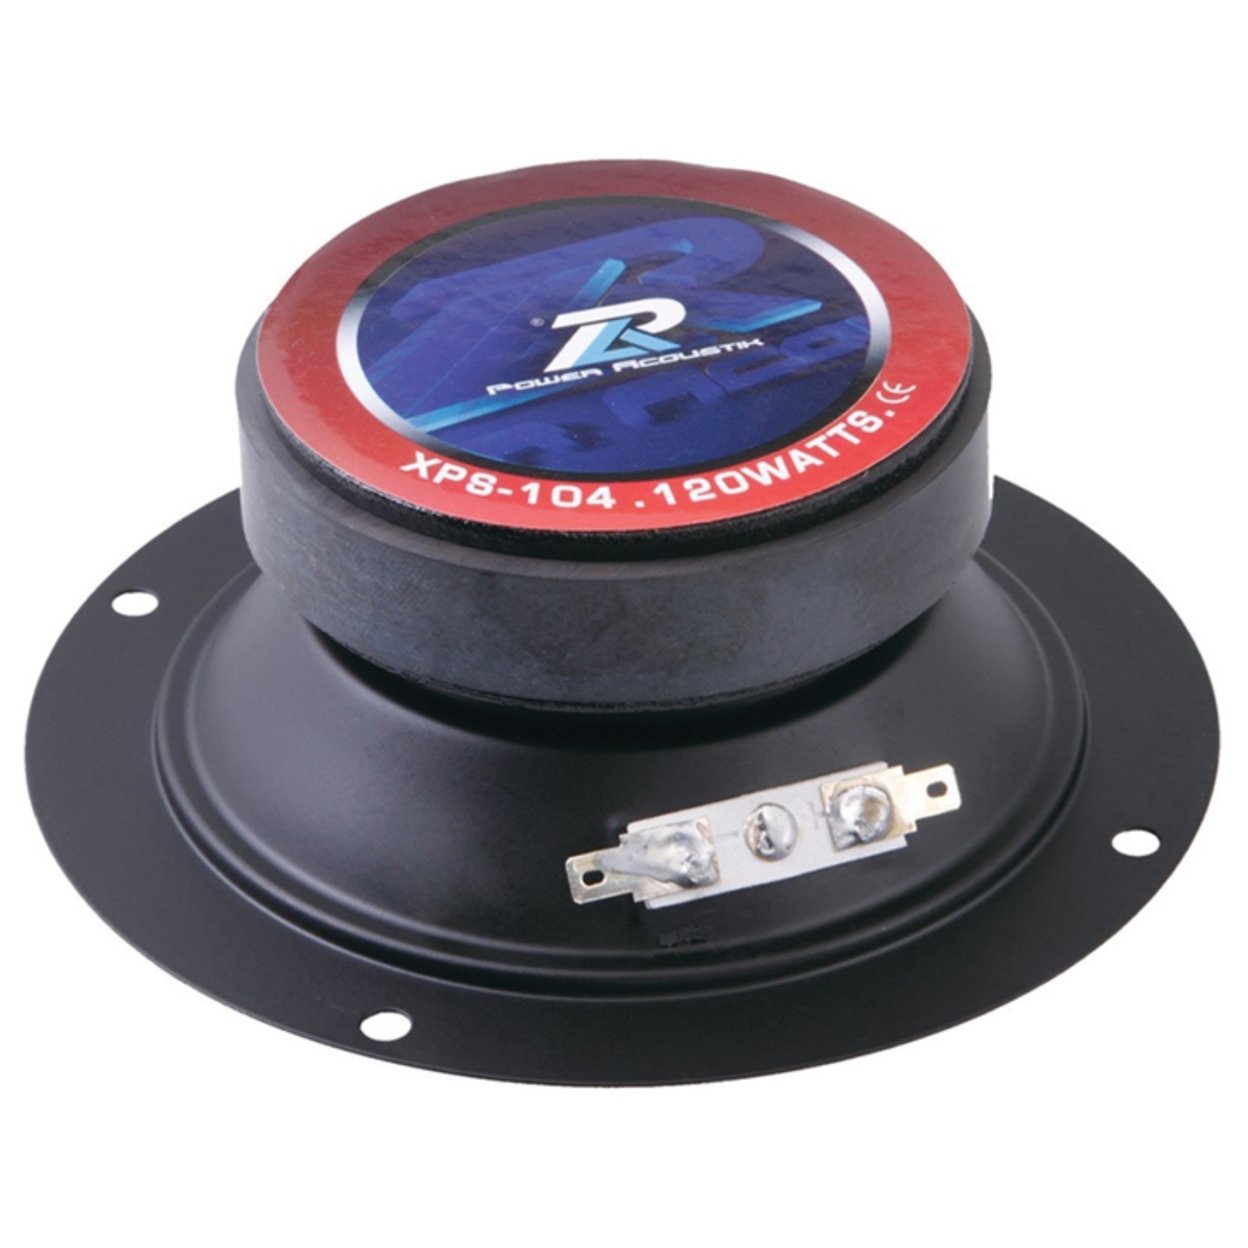 (Qyt 2) Power Acoustik XPS104 Midrange 4 Speaker